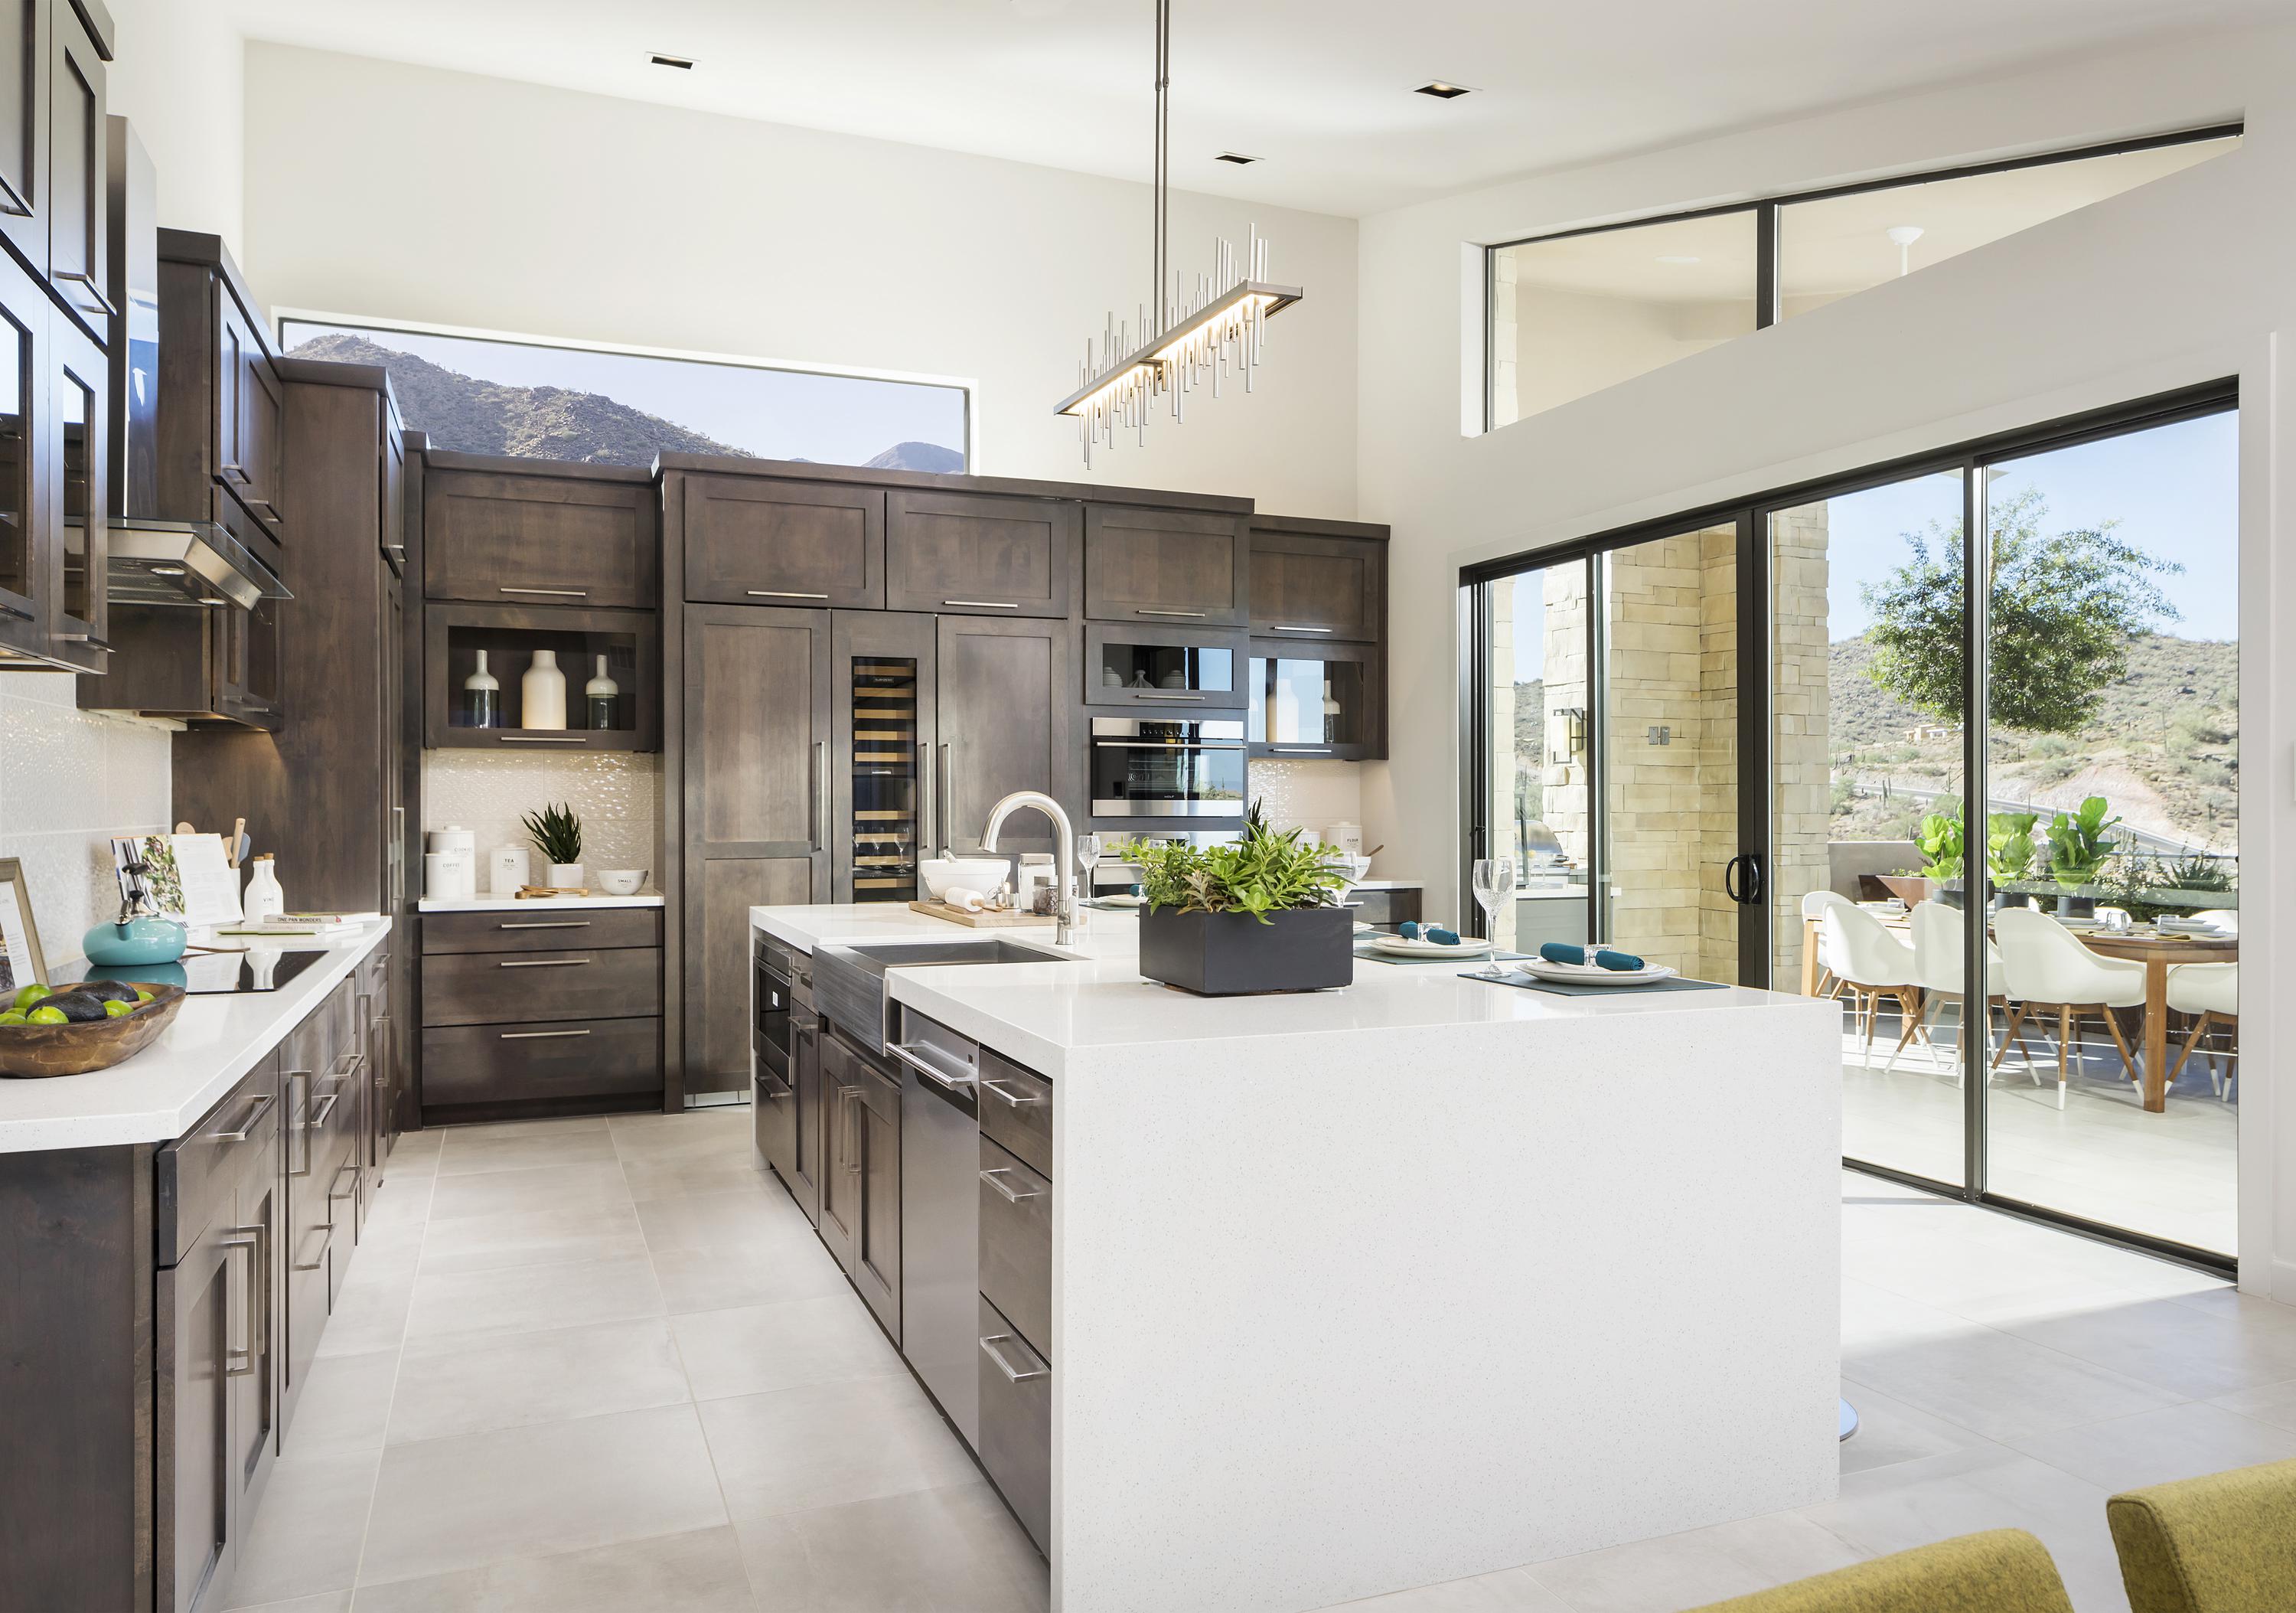 house kitchen interior design photos